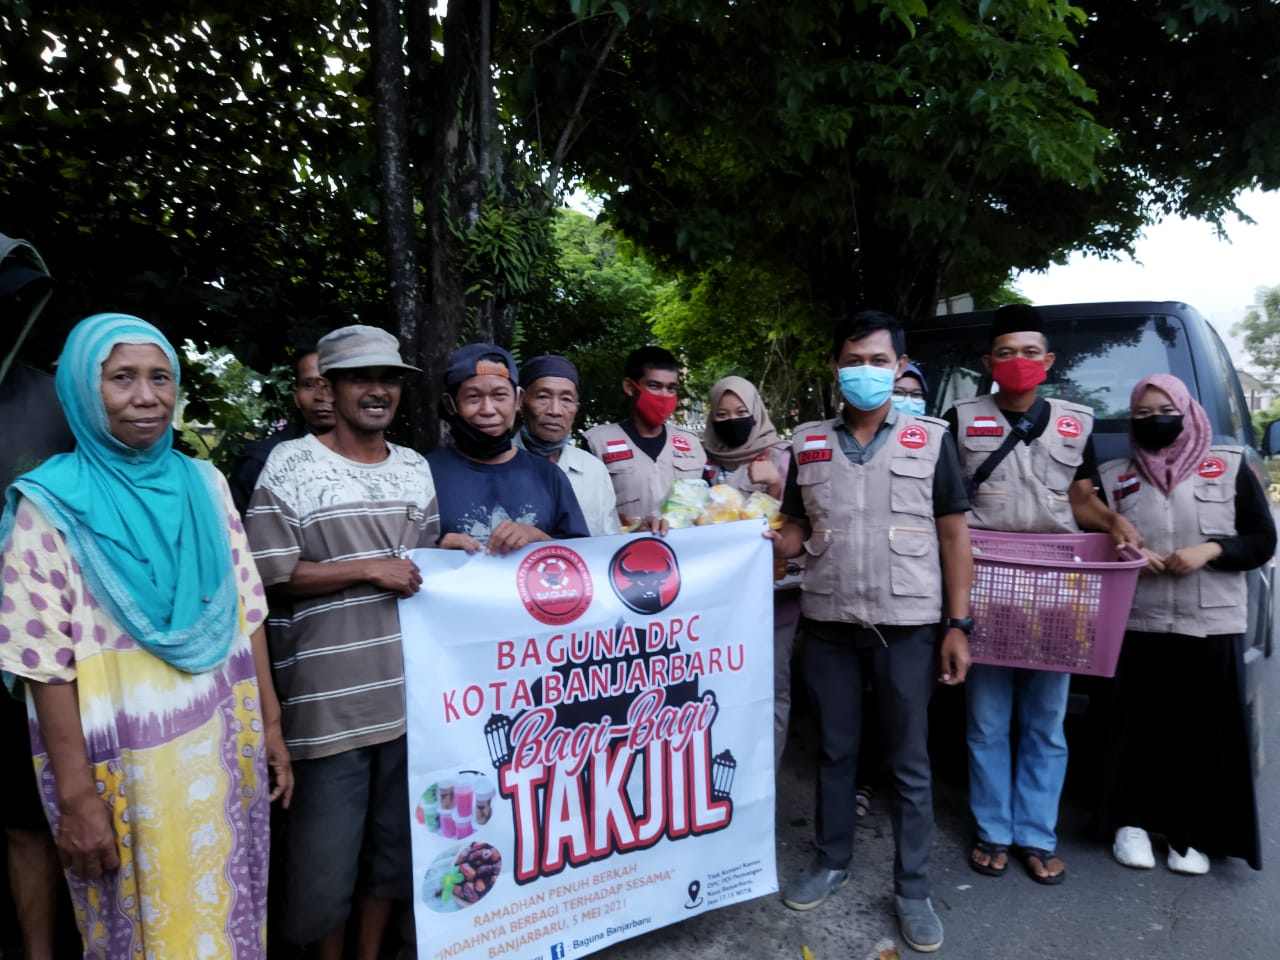 BAGUNA DPC Kota Banjarbaru Bagikan Ratusan Paket Takjil Jelang Buka Puasa